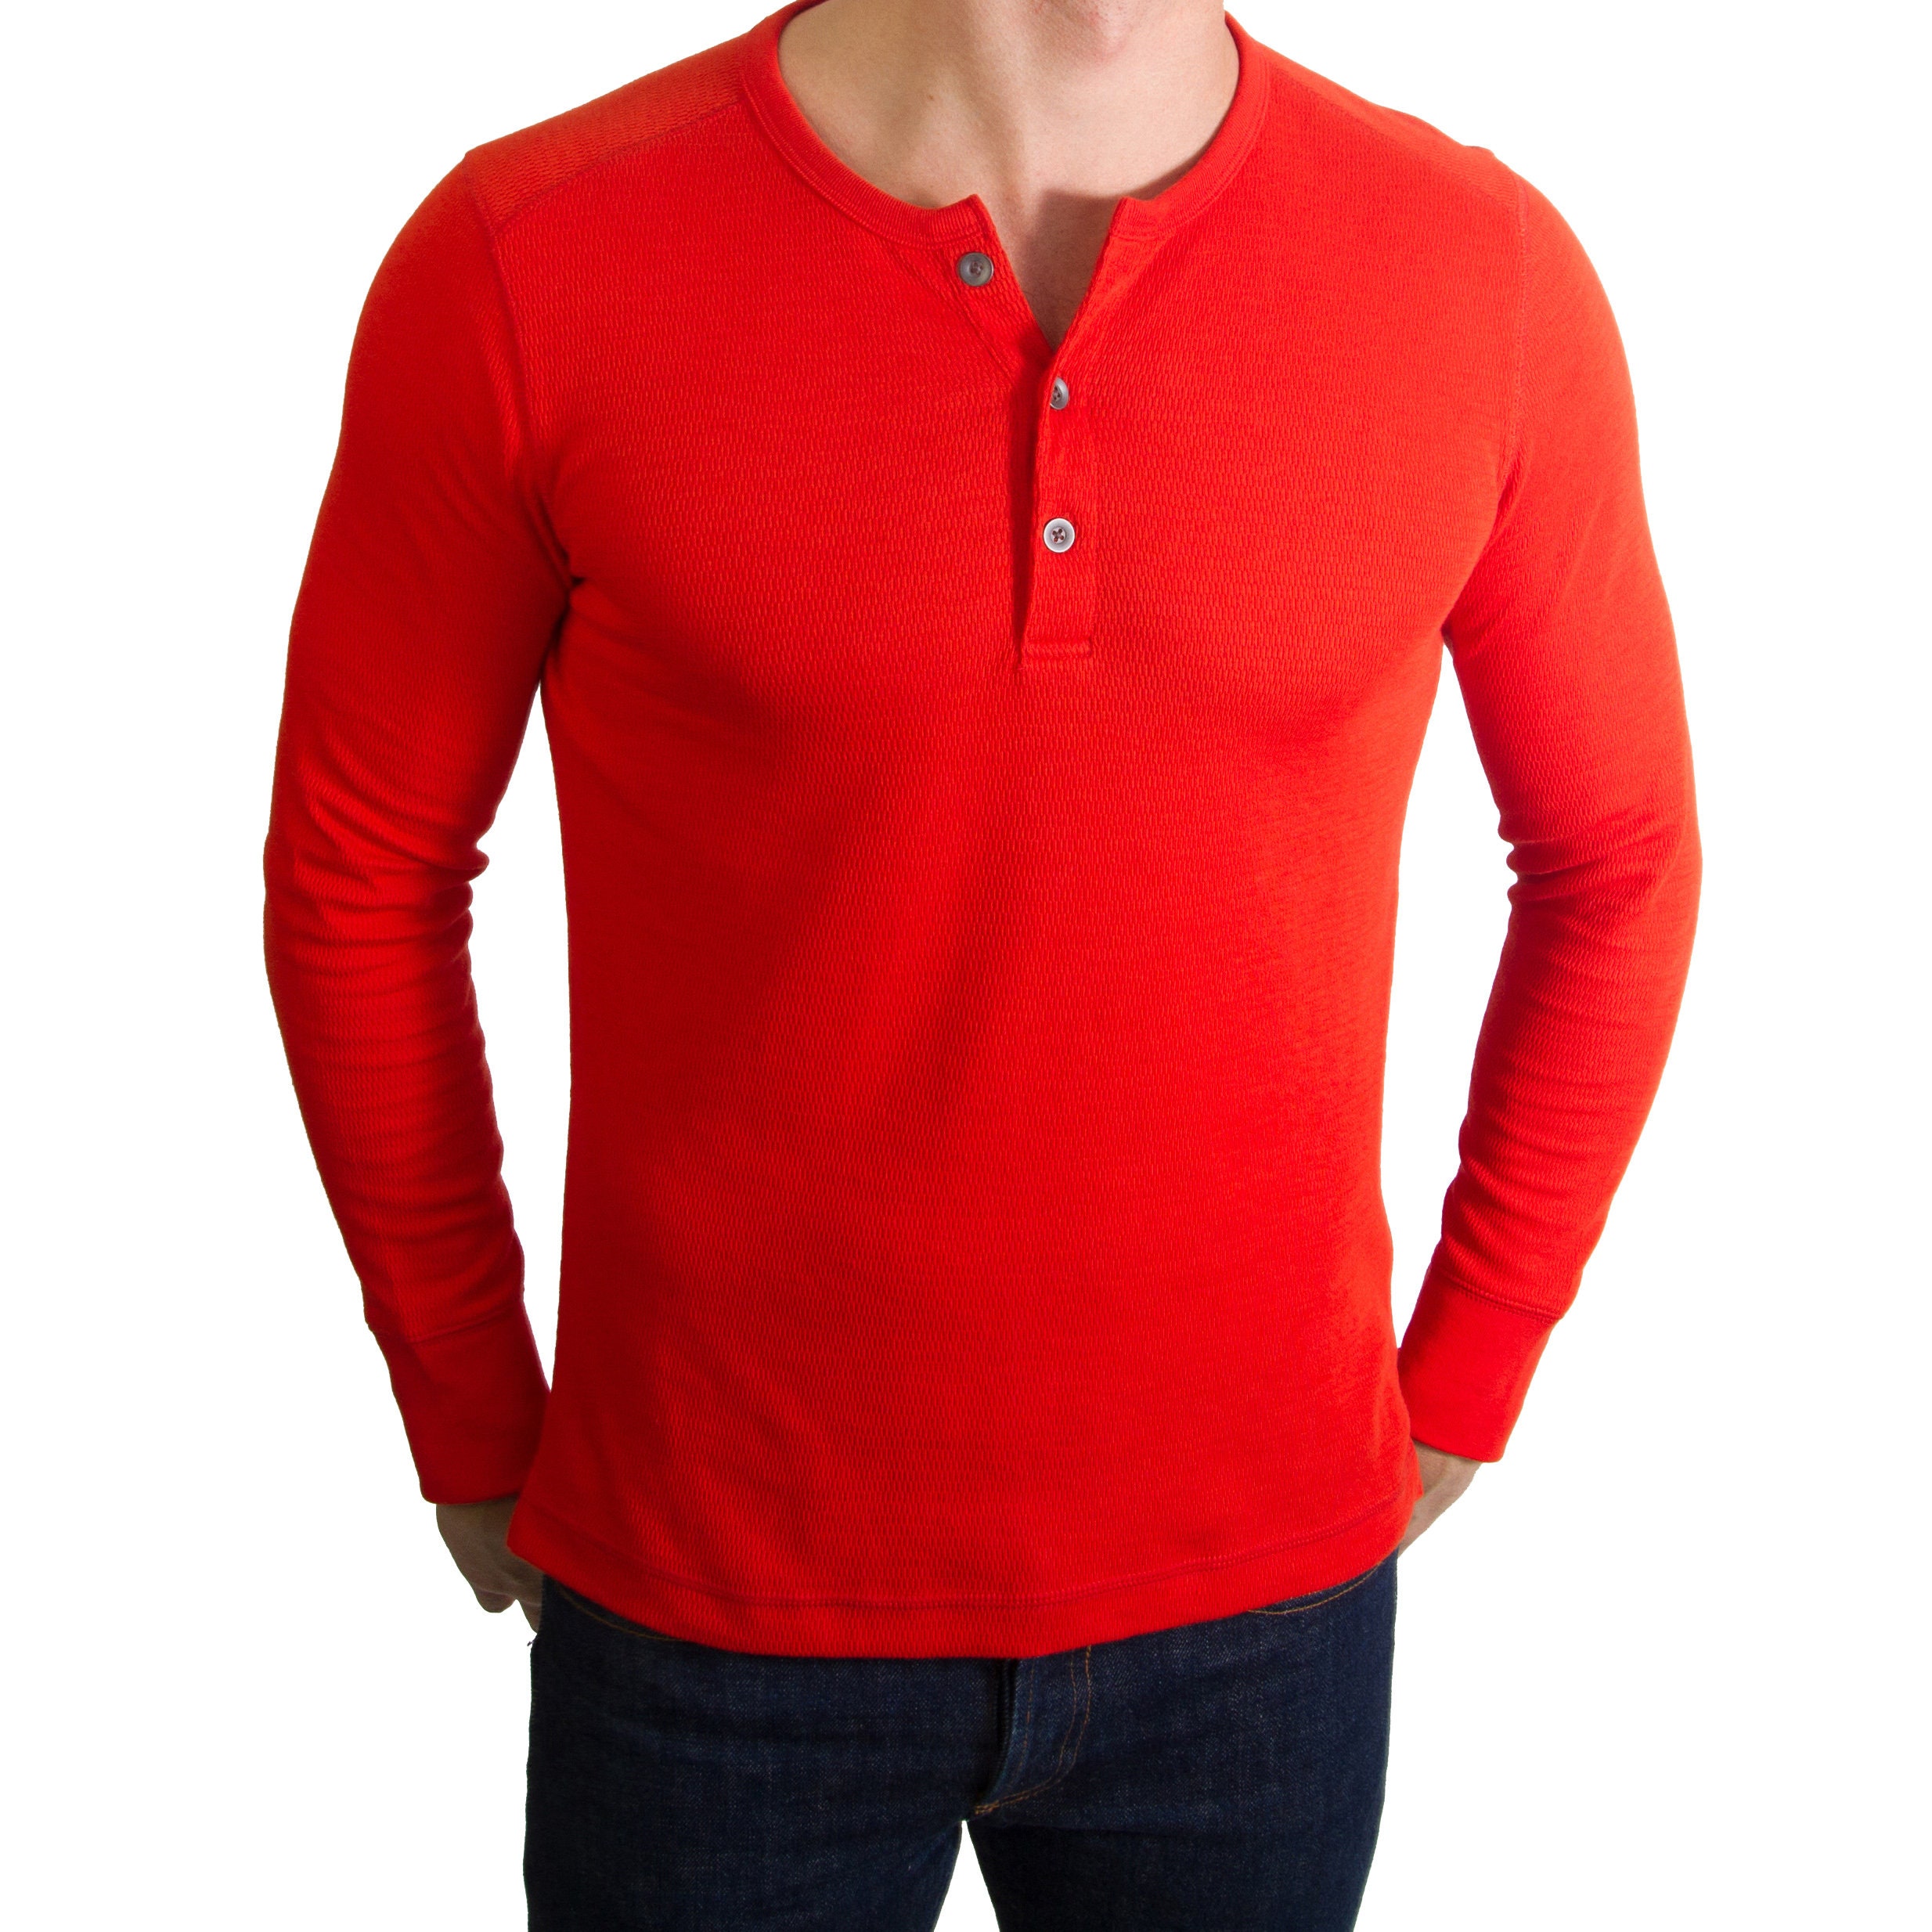 Core Temp Waffle-knit Henley T-shirt Long Sleeve Shirt Men's Gift